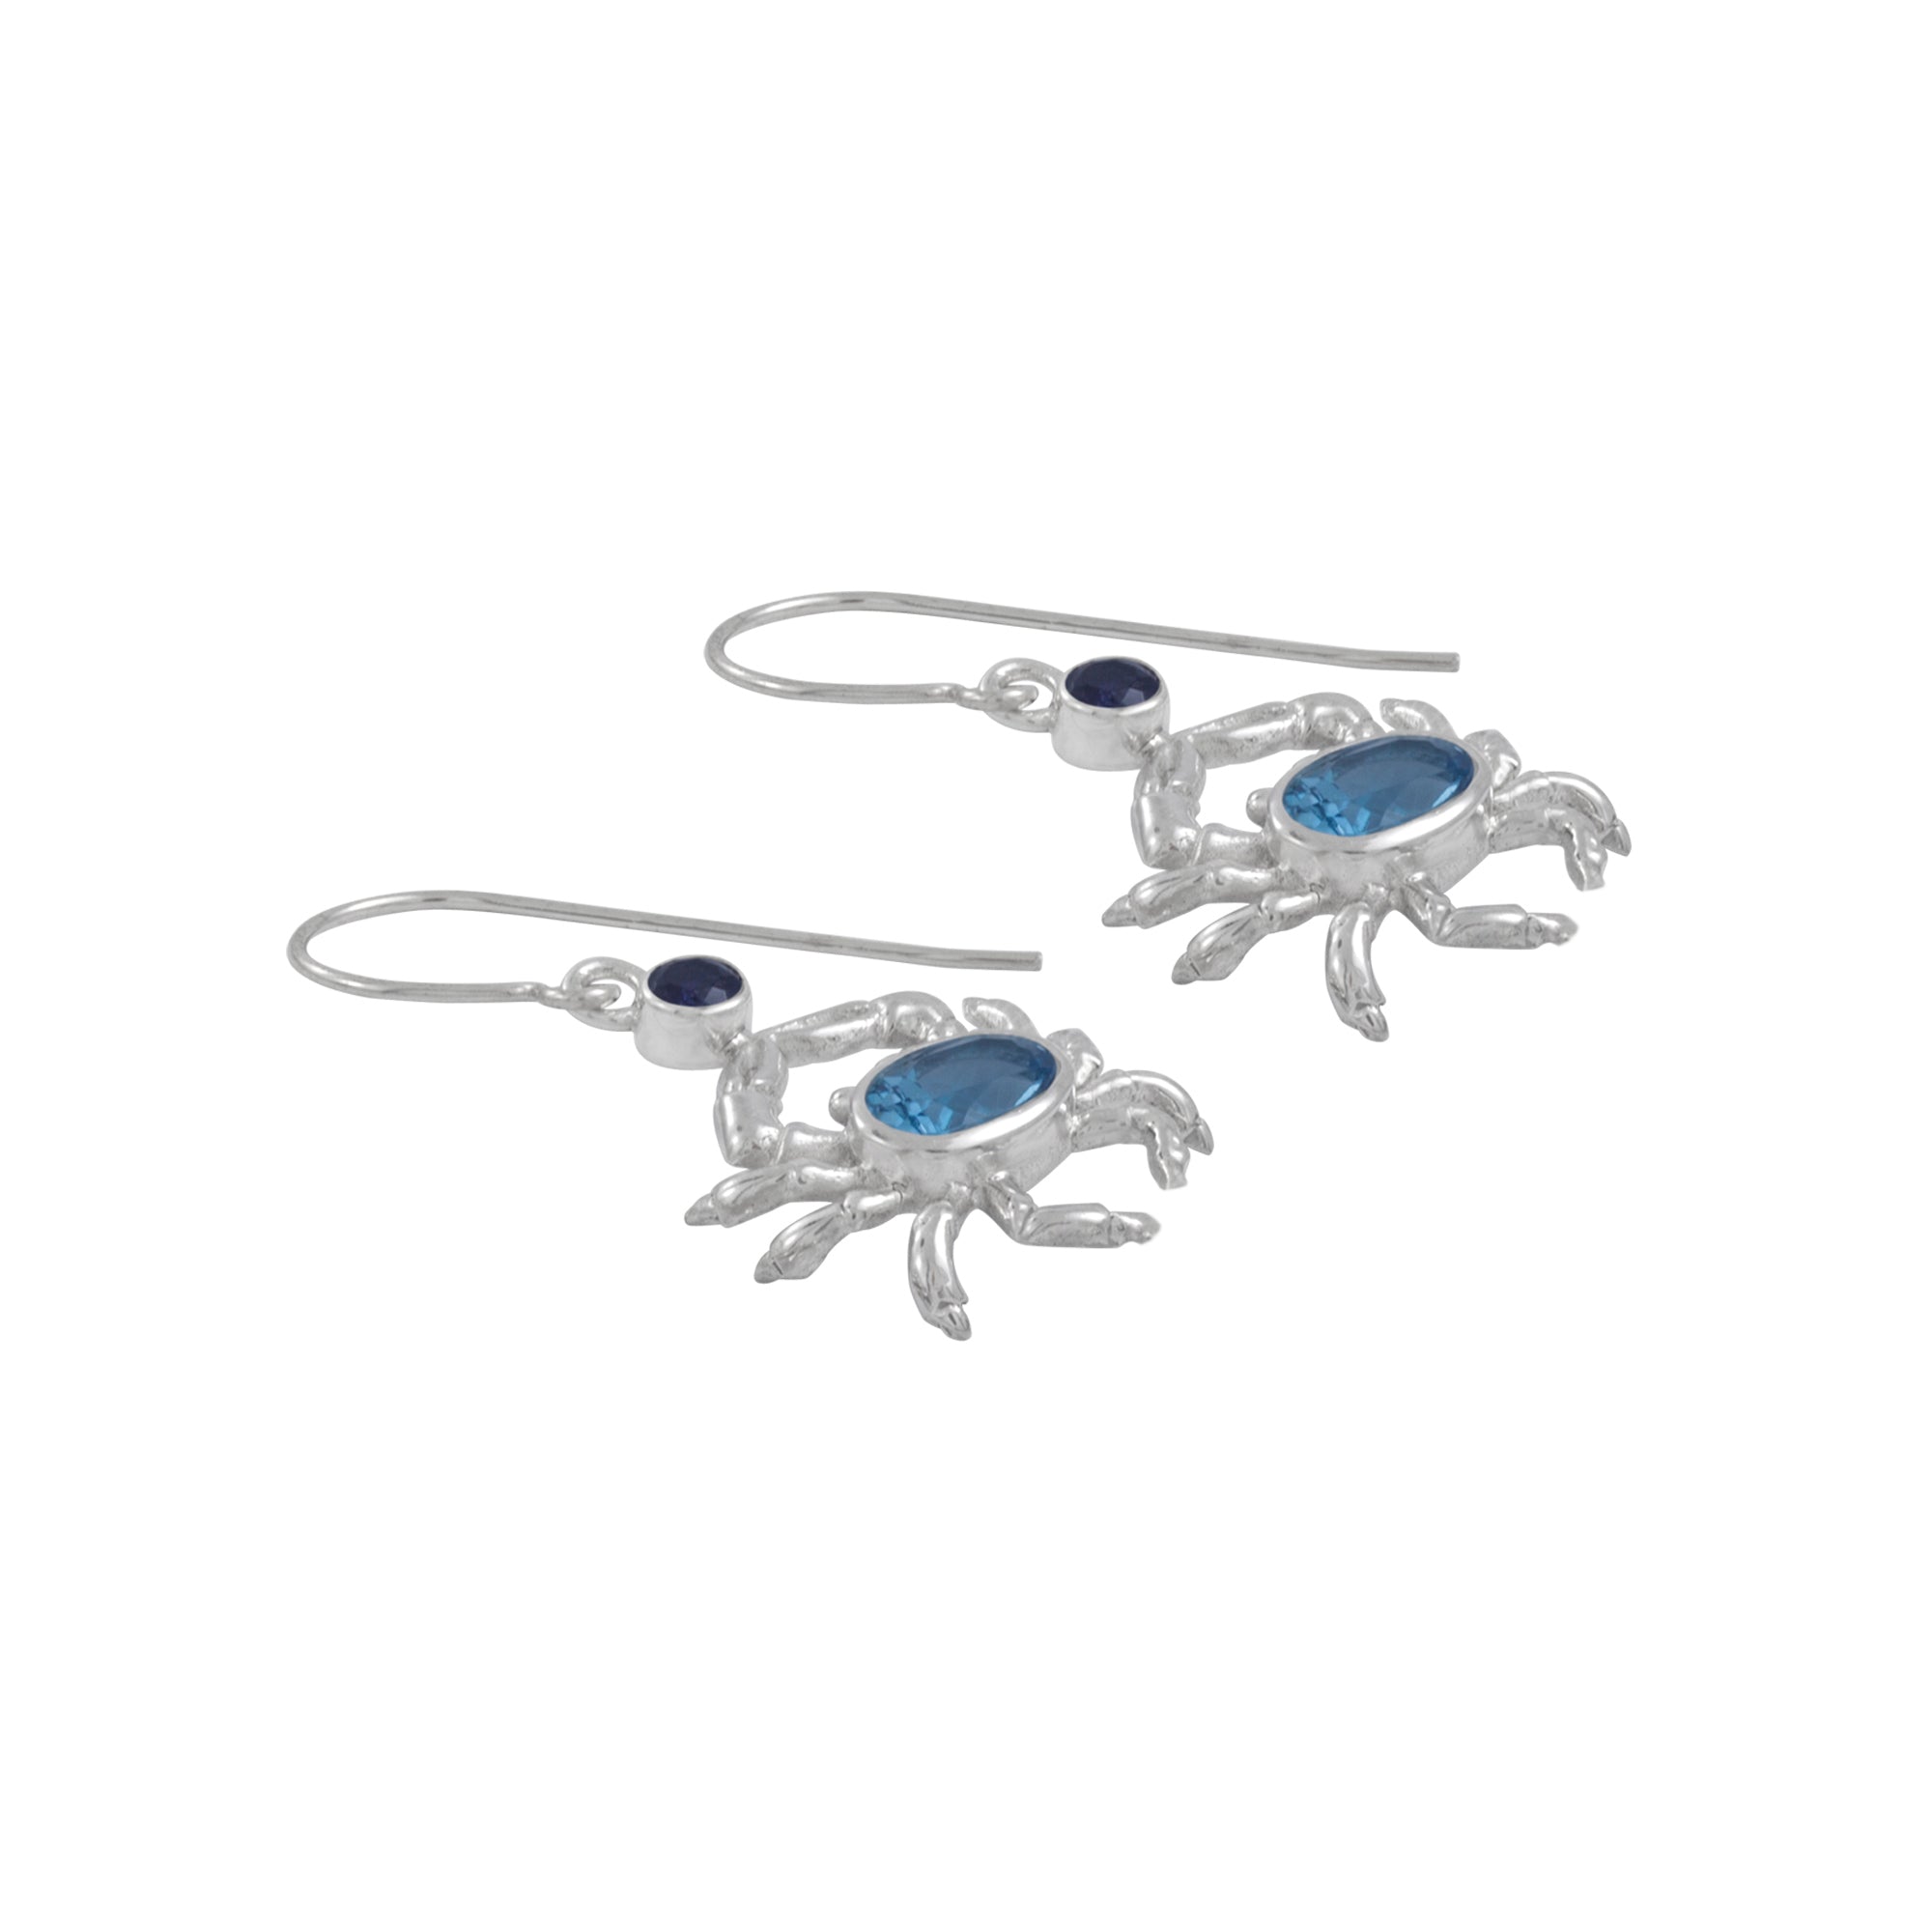 Blue Crab Earrings featuring Blue topaz & iolite gem stones